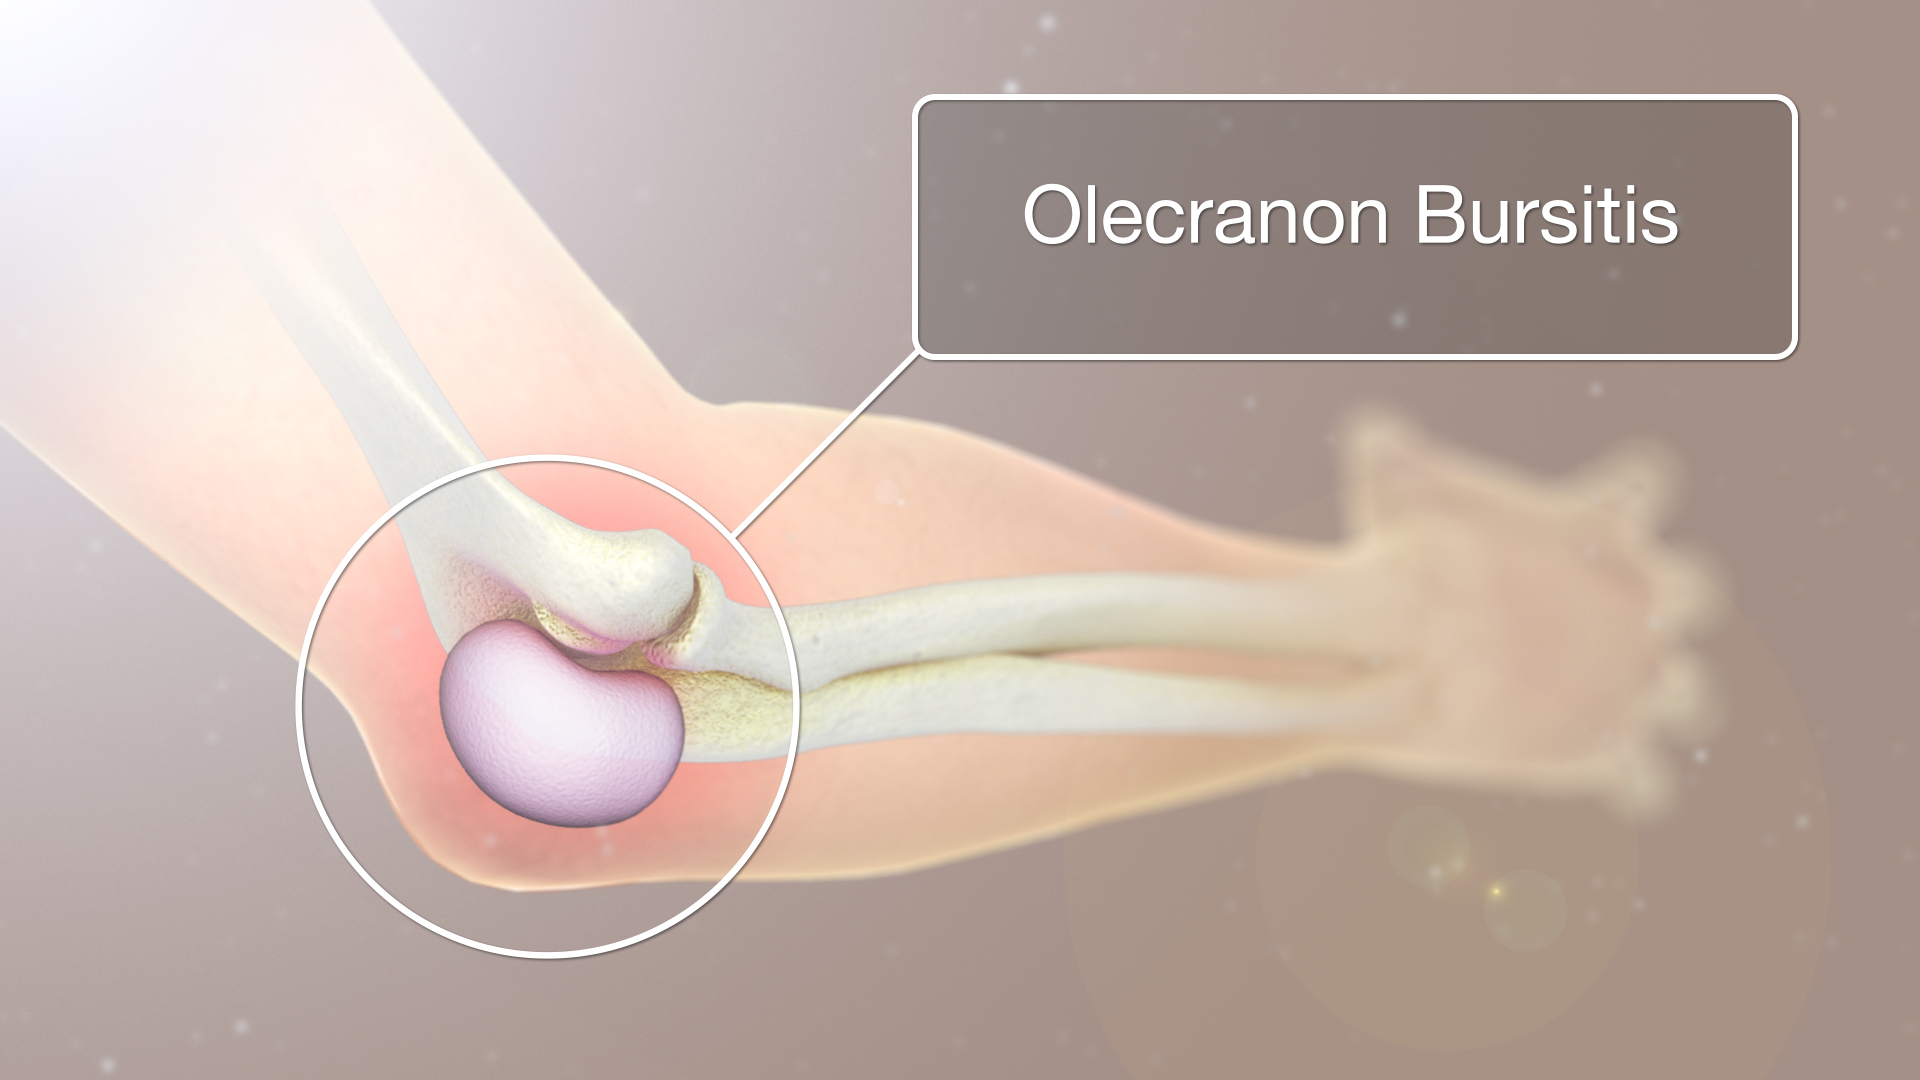 Olecranon Bursitis shown and explained using medical animation still shot